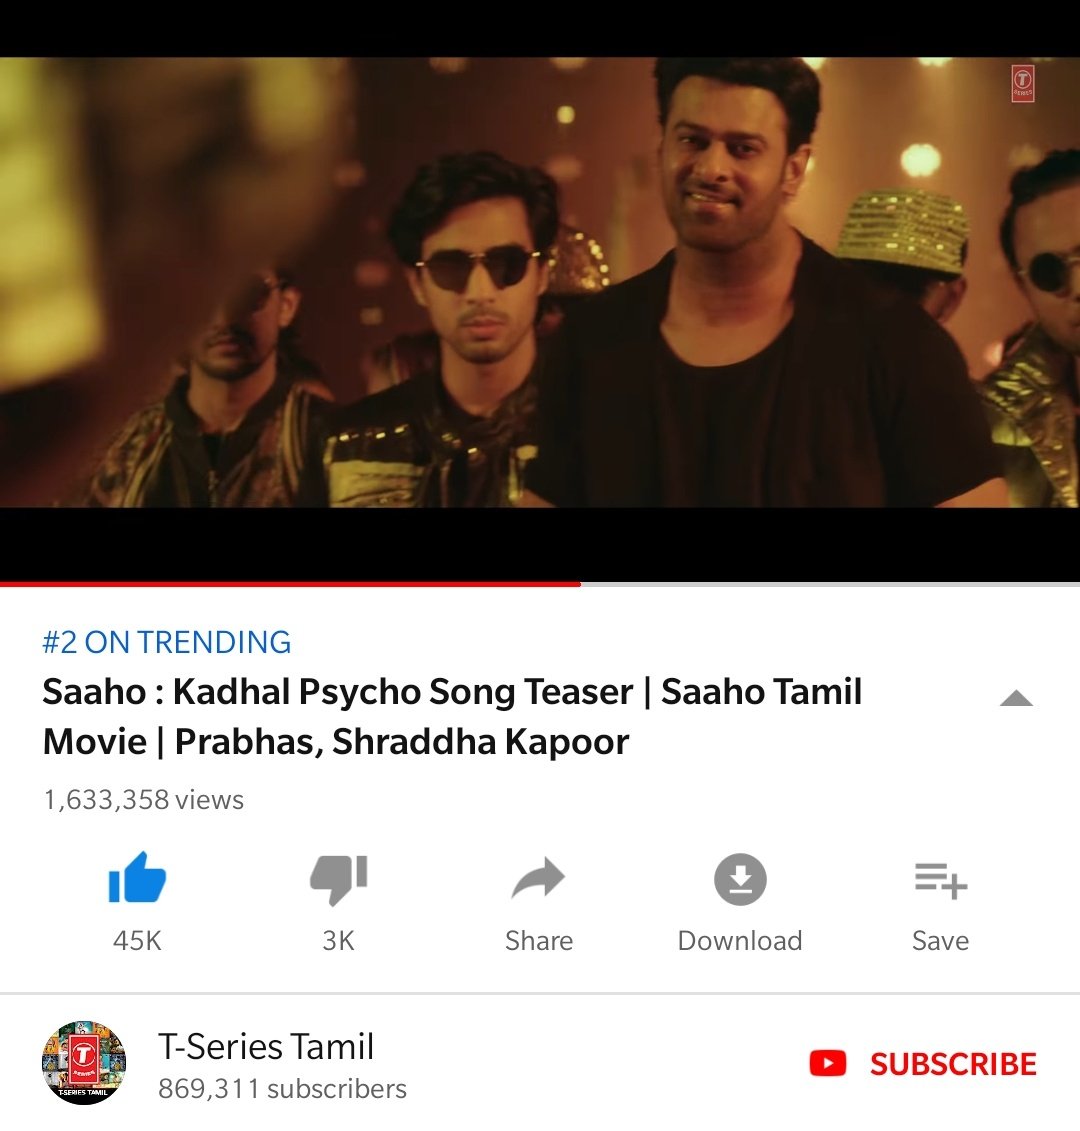 #KadhalPsycho #PsychoSaiyaan Tamil version clocked 1.63M+ views and 45K+ Likes 💥
Still trending at #2 YT.....

Get ready to hop on full song from 8th July 🕺💃

#PyschoSaiyaan 🎧
#Prabhas #Saaho